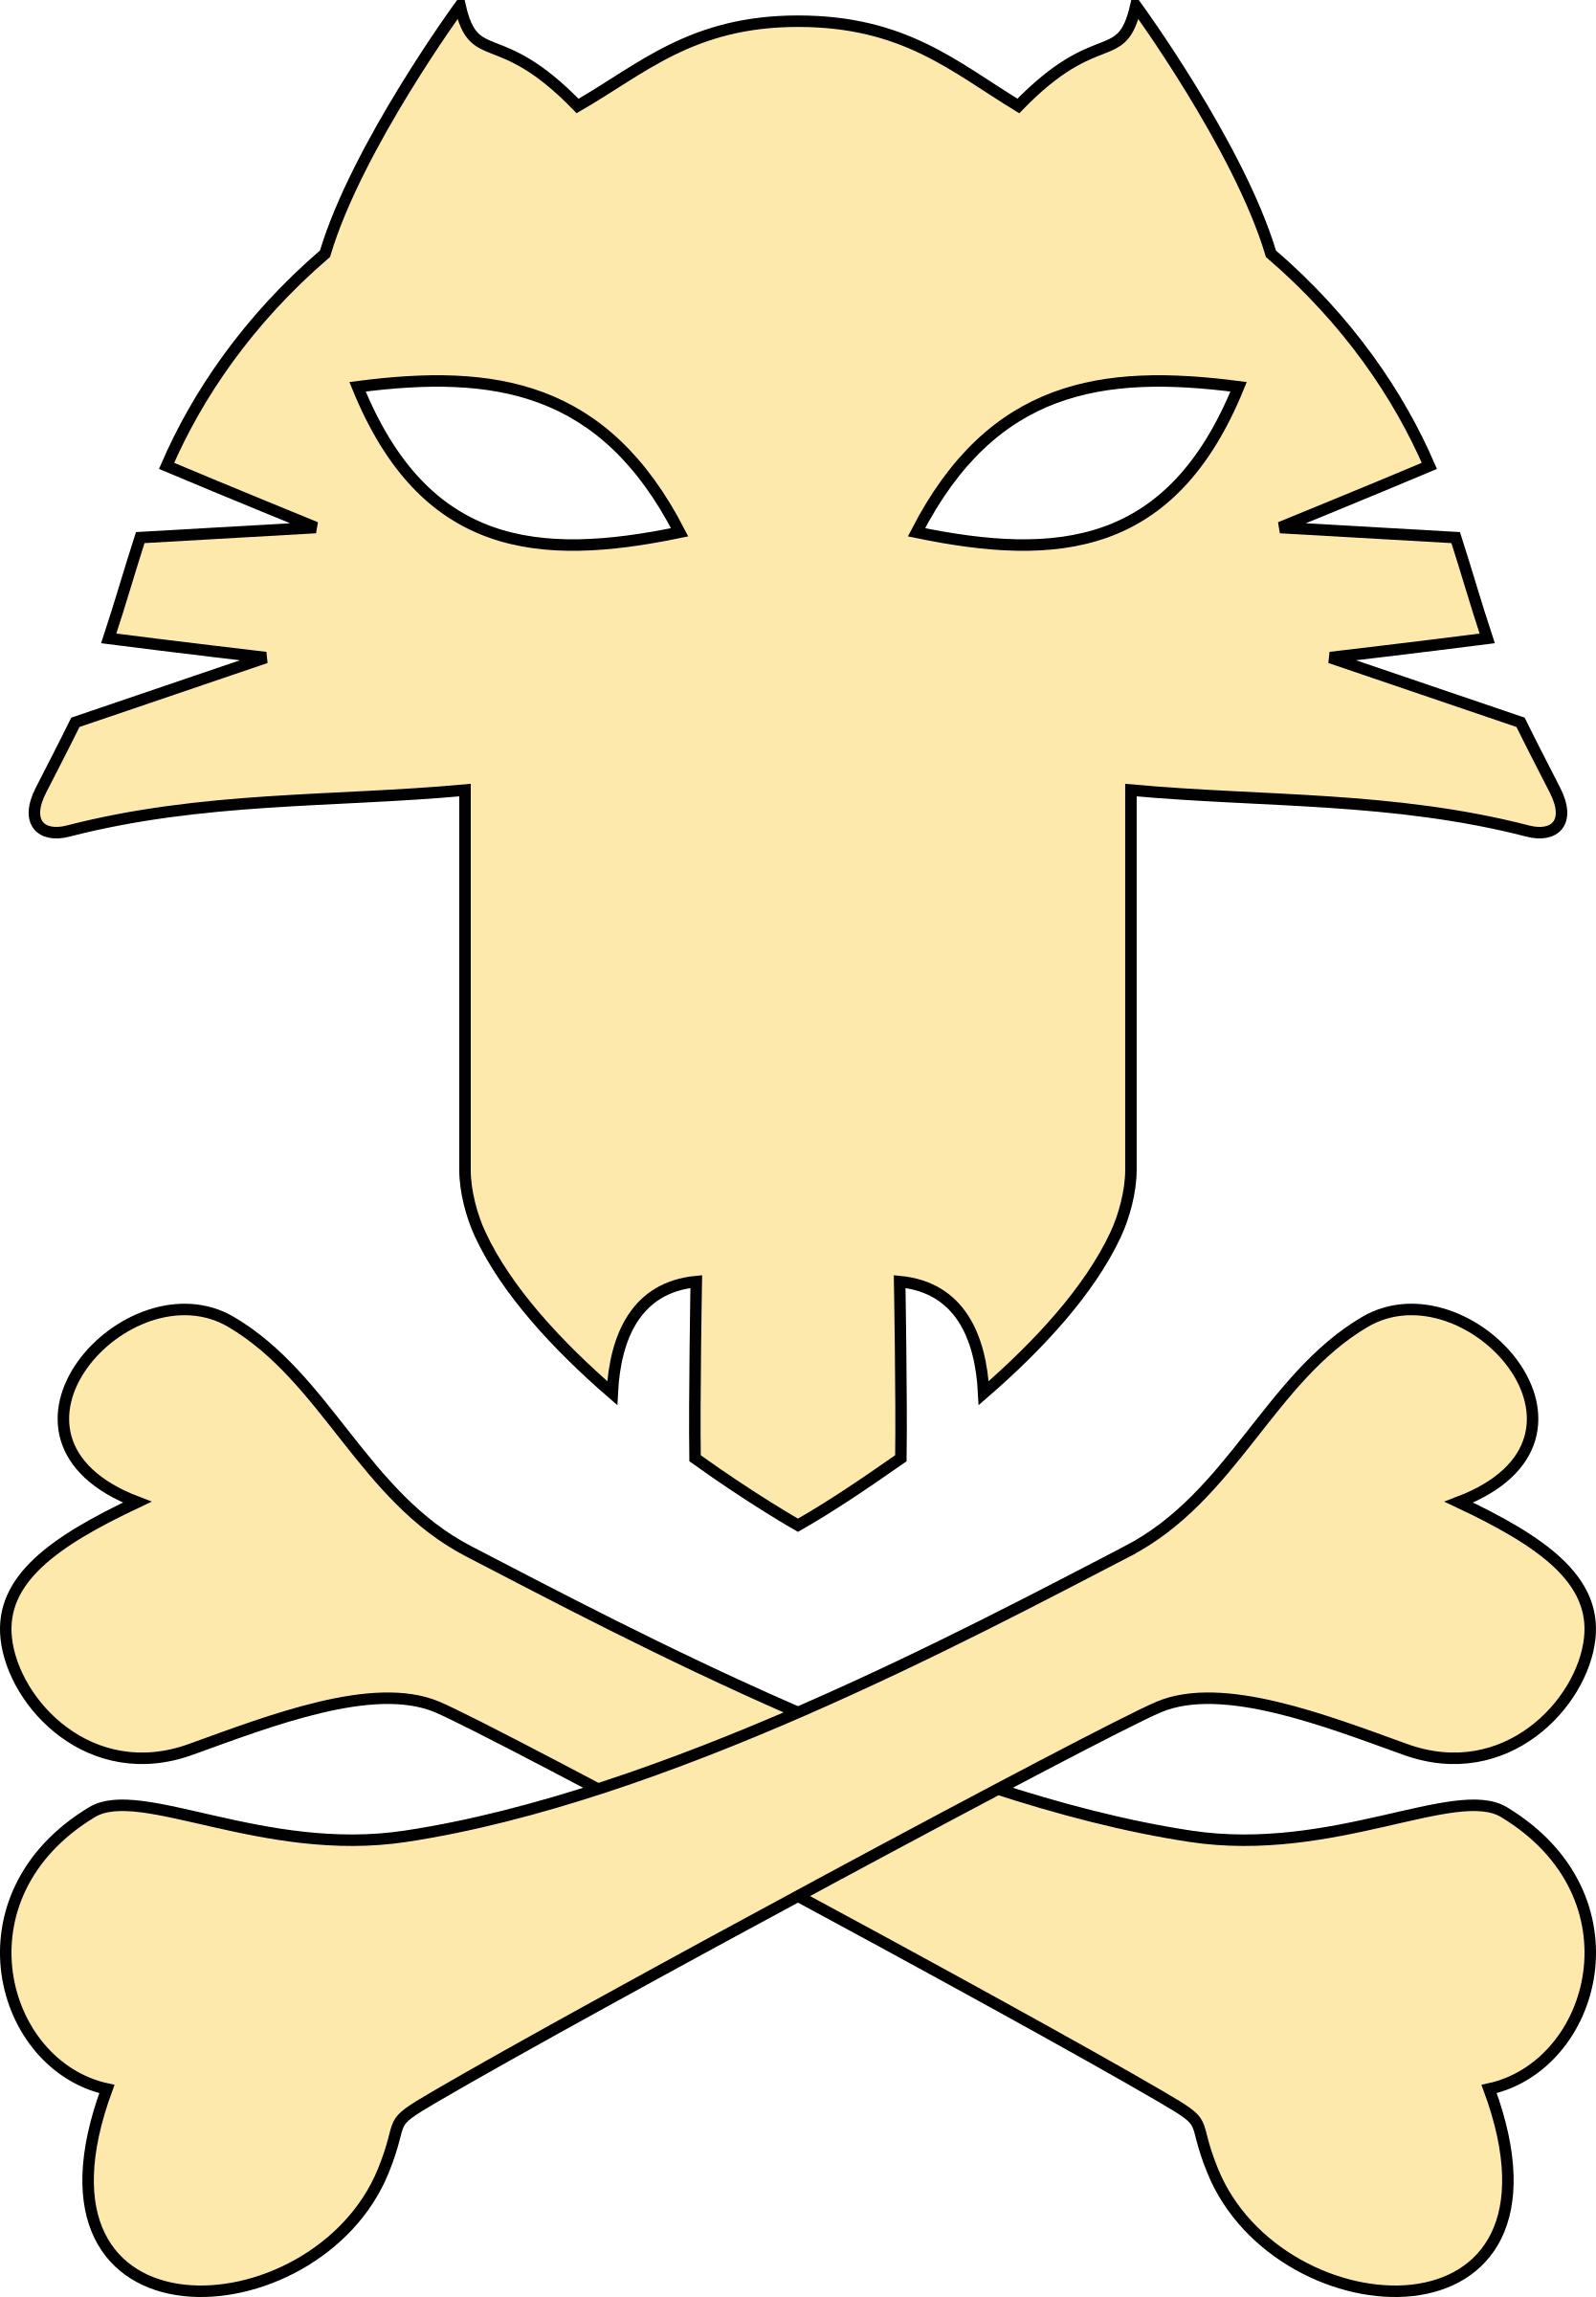 Cat pirates symbol PNG icons